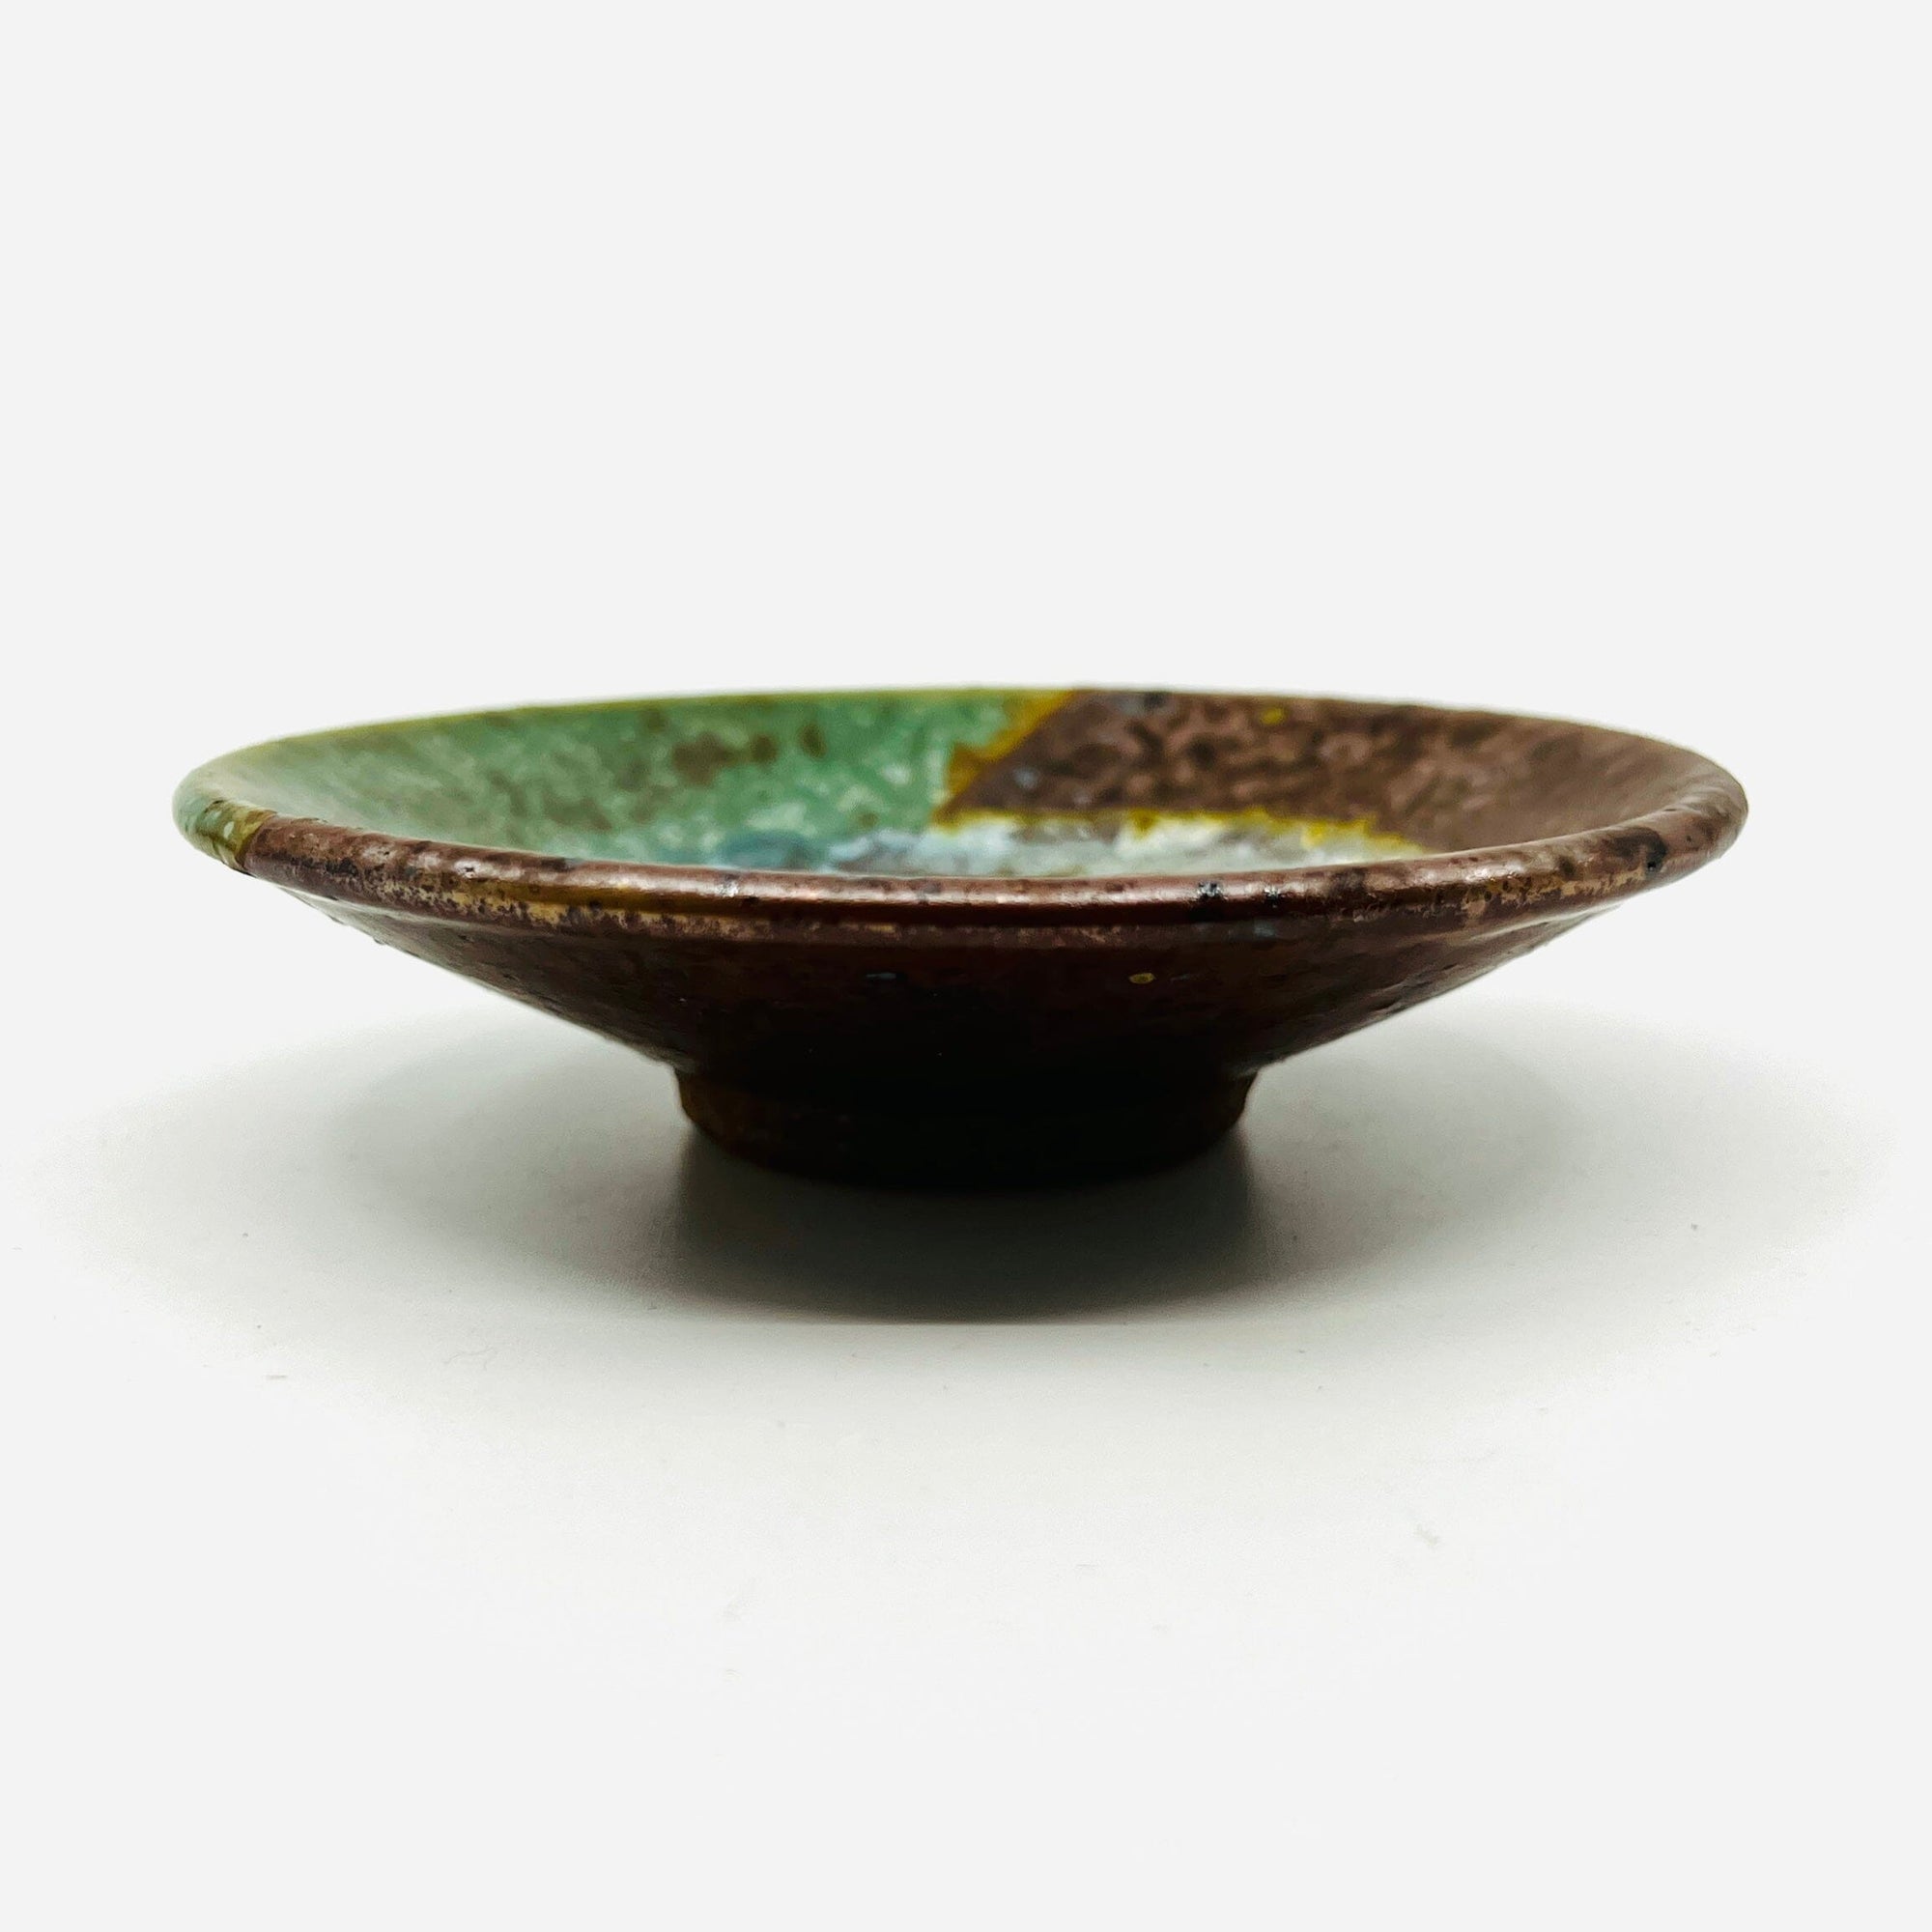 Small Ceramic and Glass Dish, Meddle Decor Dock 6 